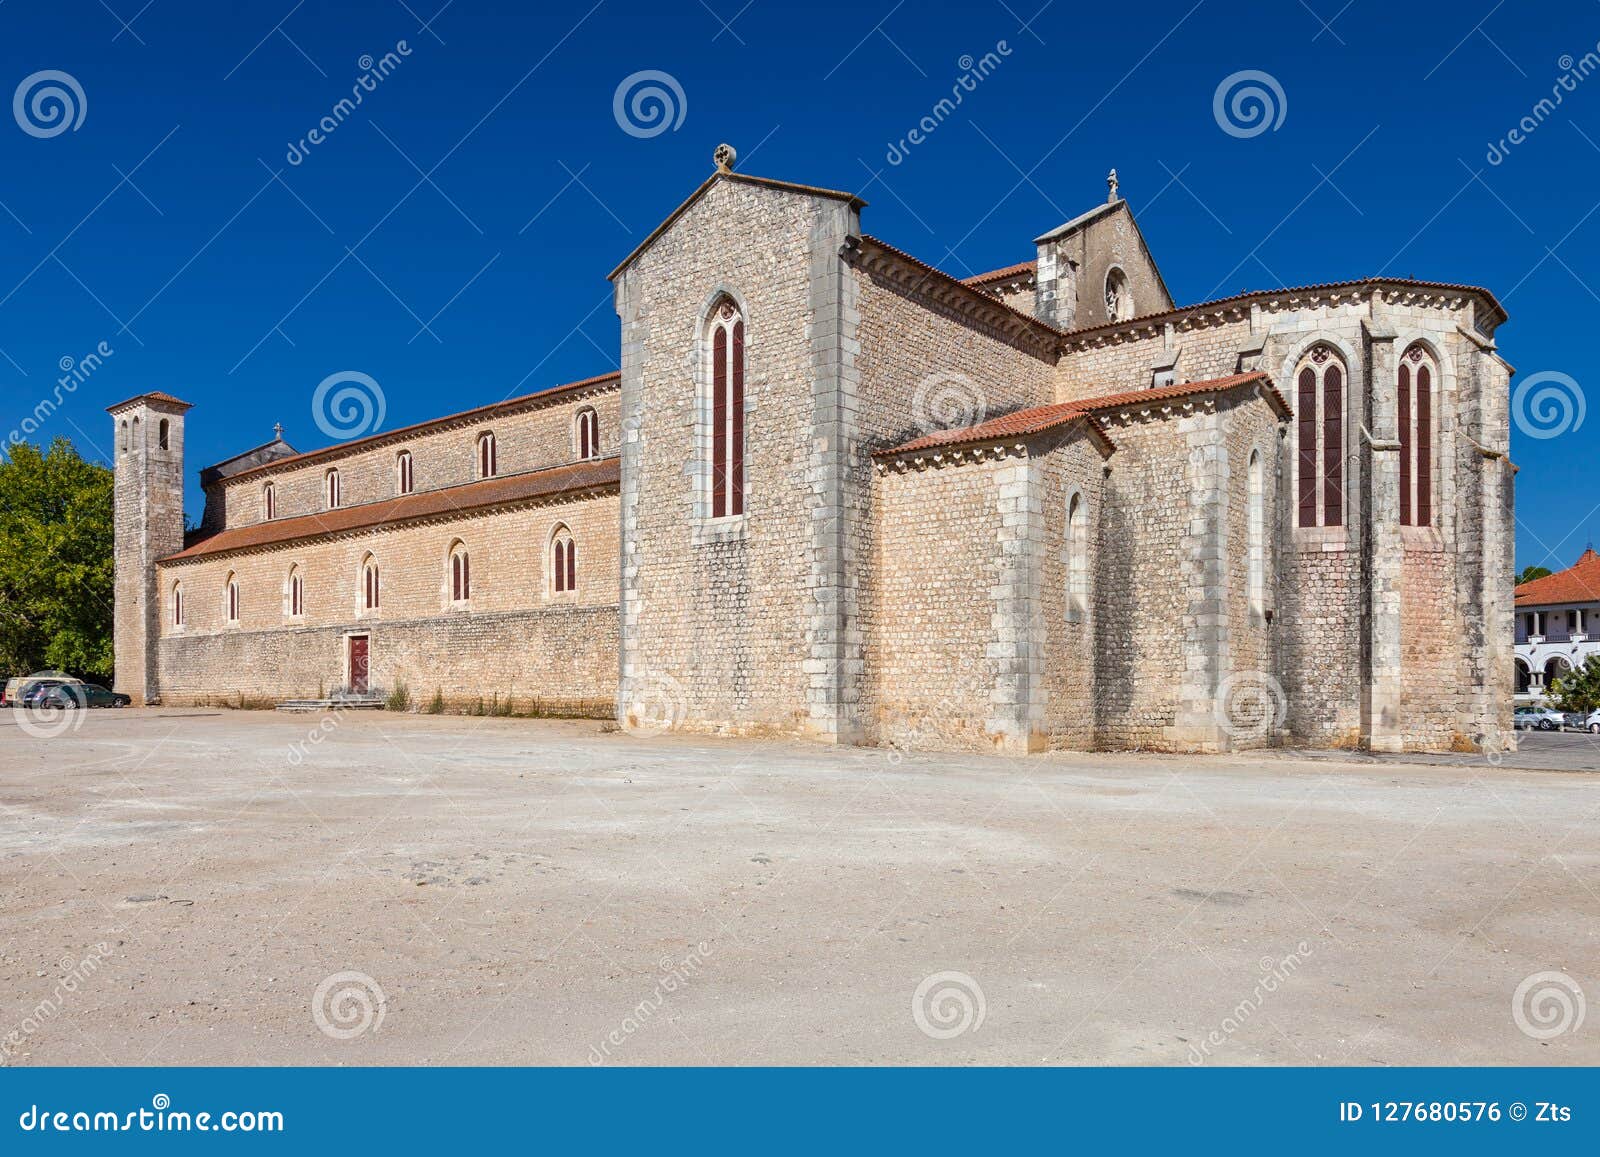 igreja de santa clara church part of the former santa clara nunnery in the city of santarem